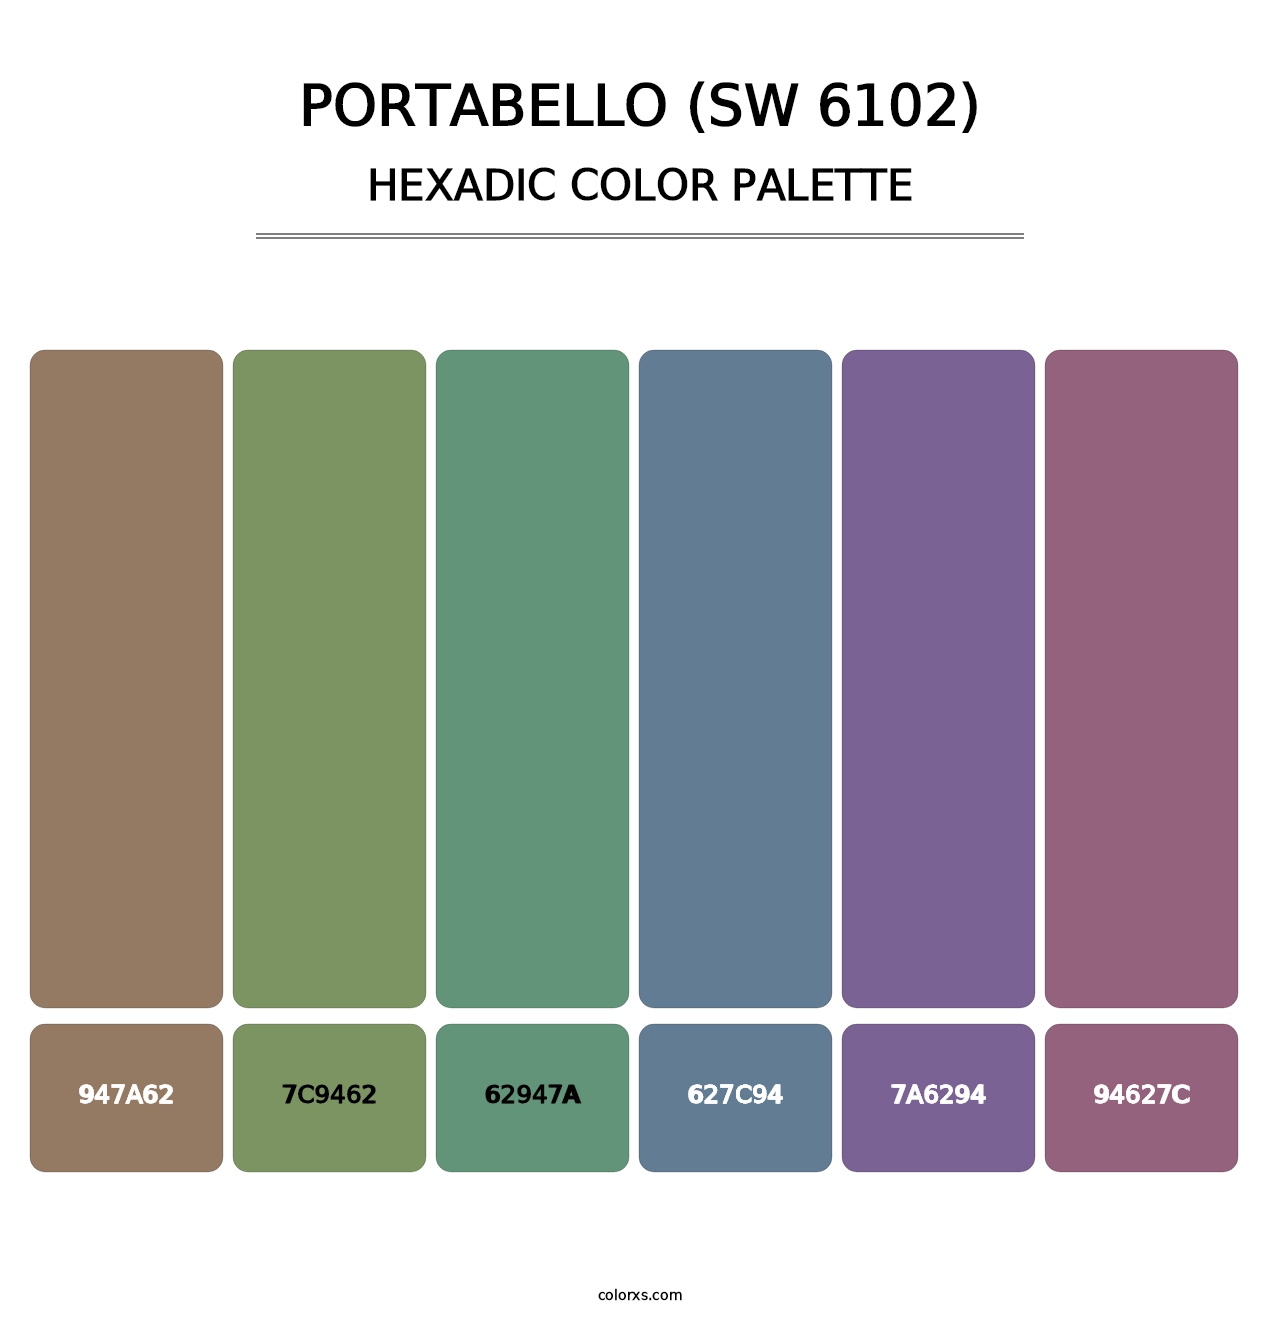 Portabello (SW 6102) - Hexadic Color Palette